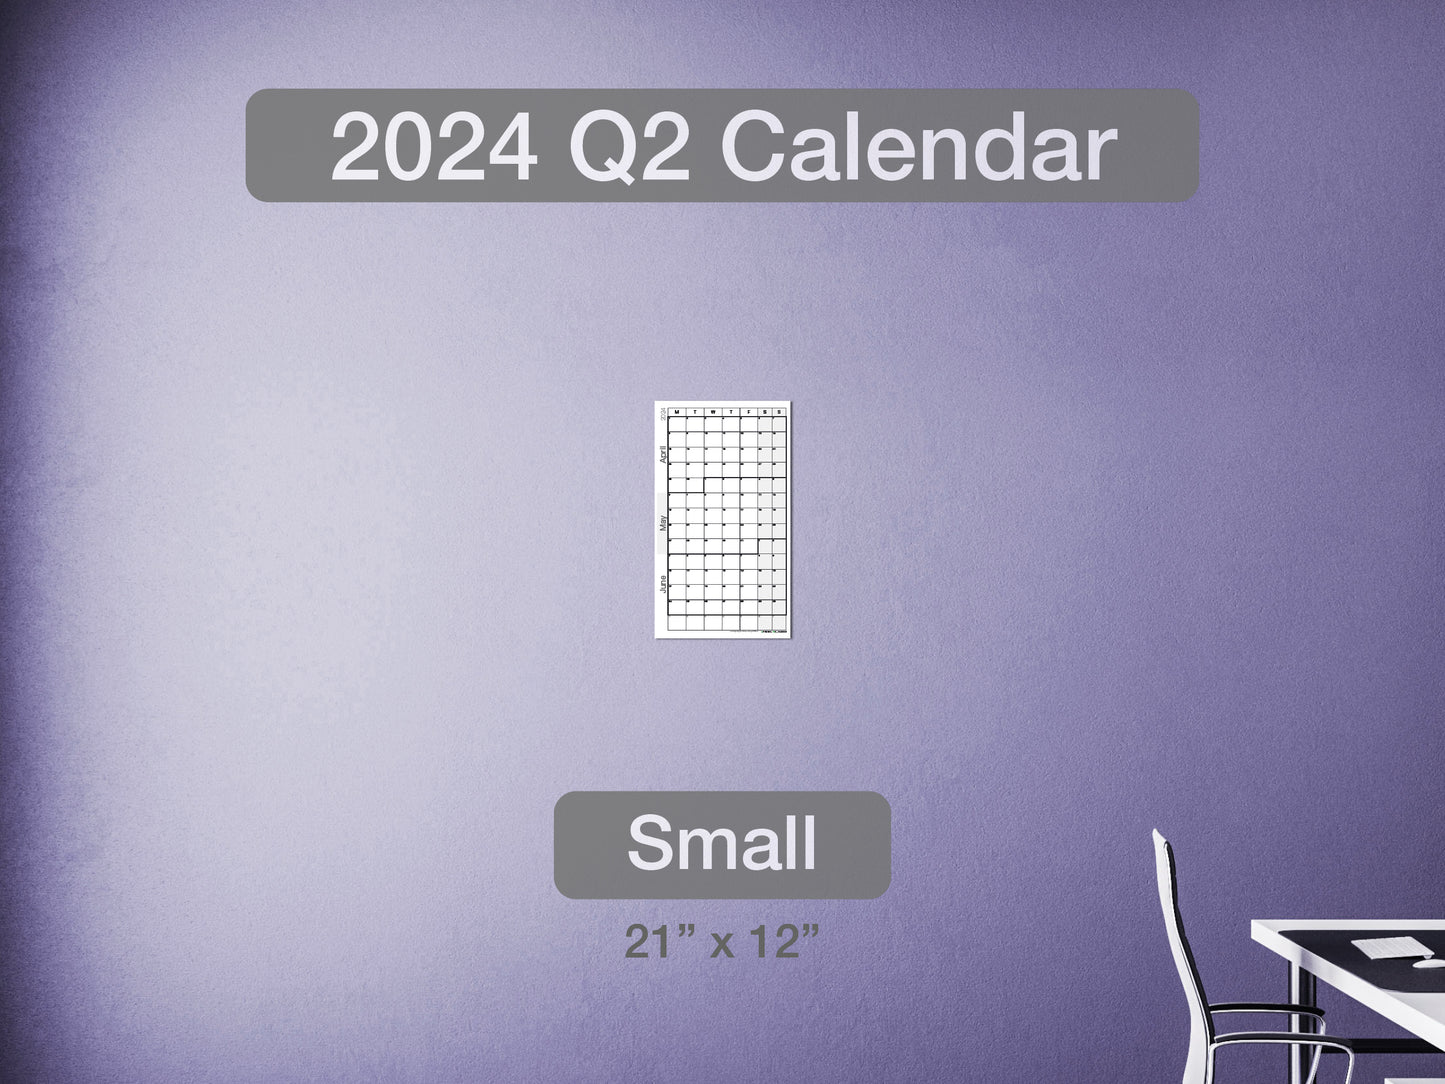 2024 Q2 Calendar Small